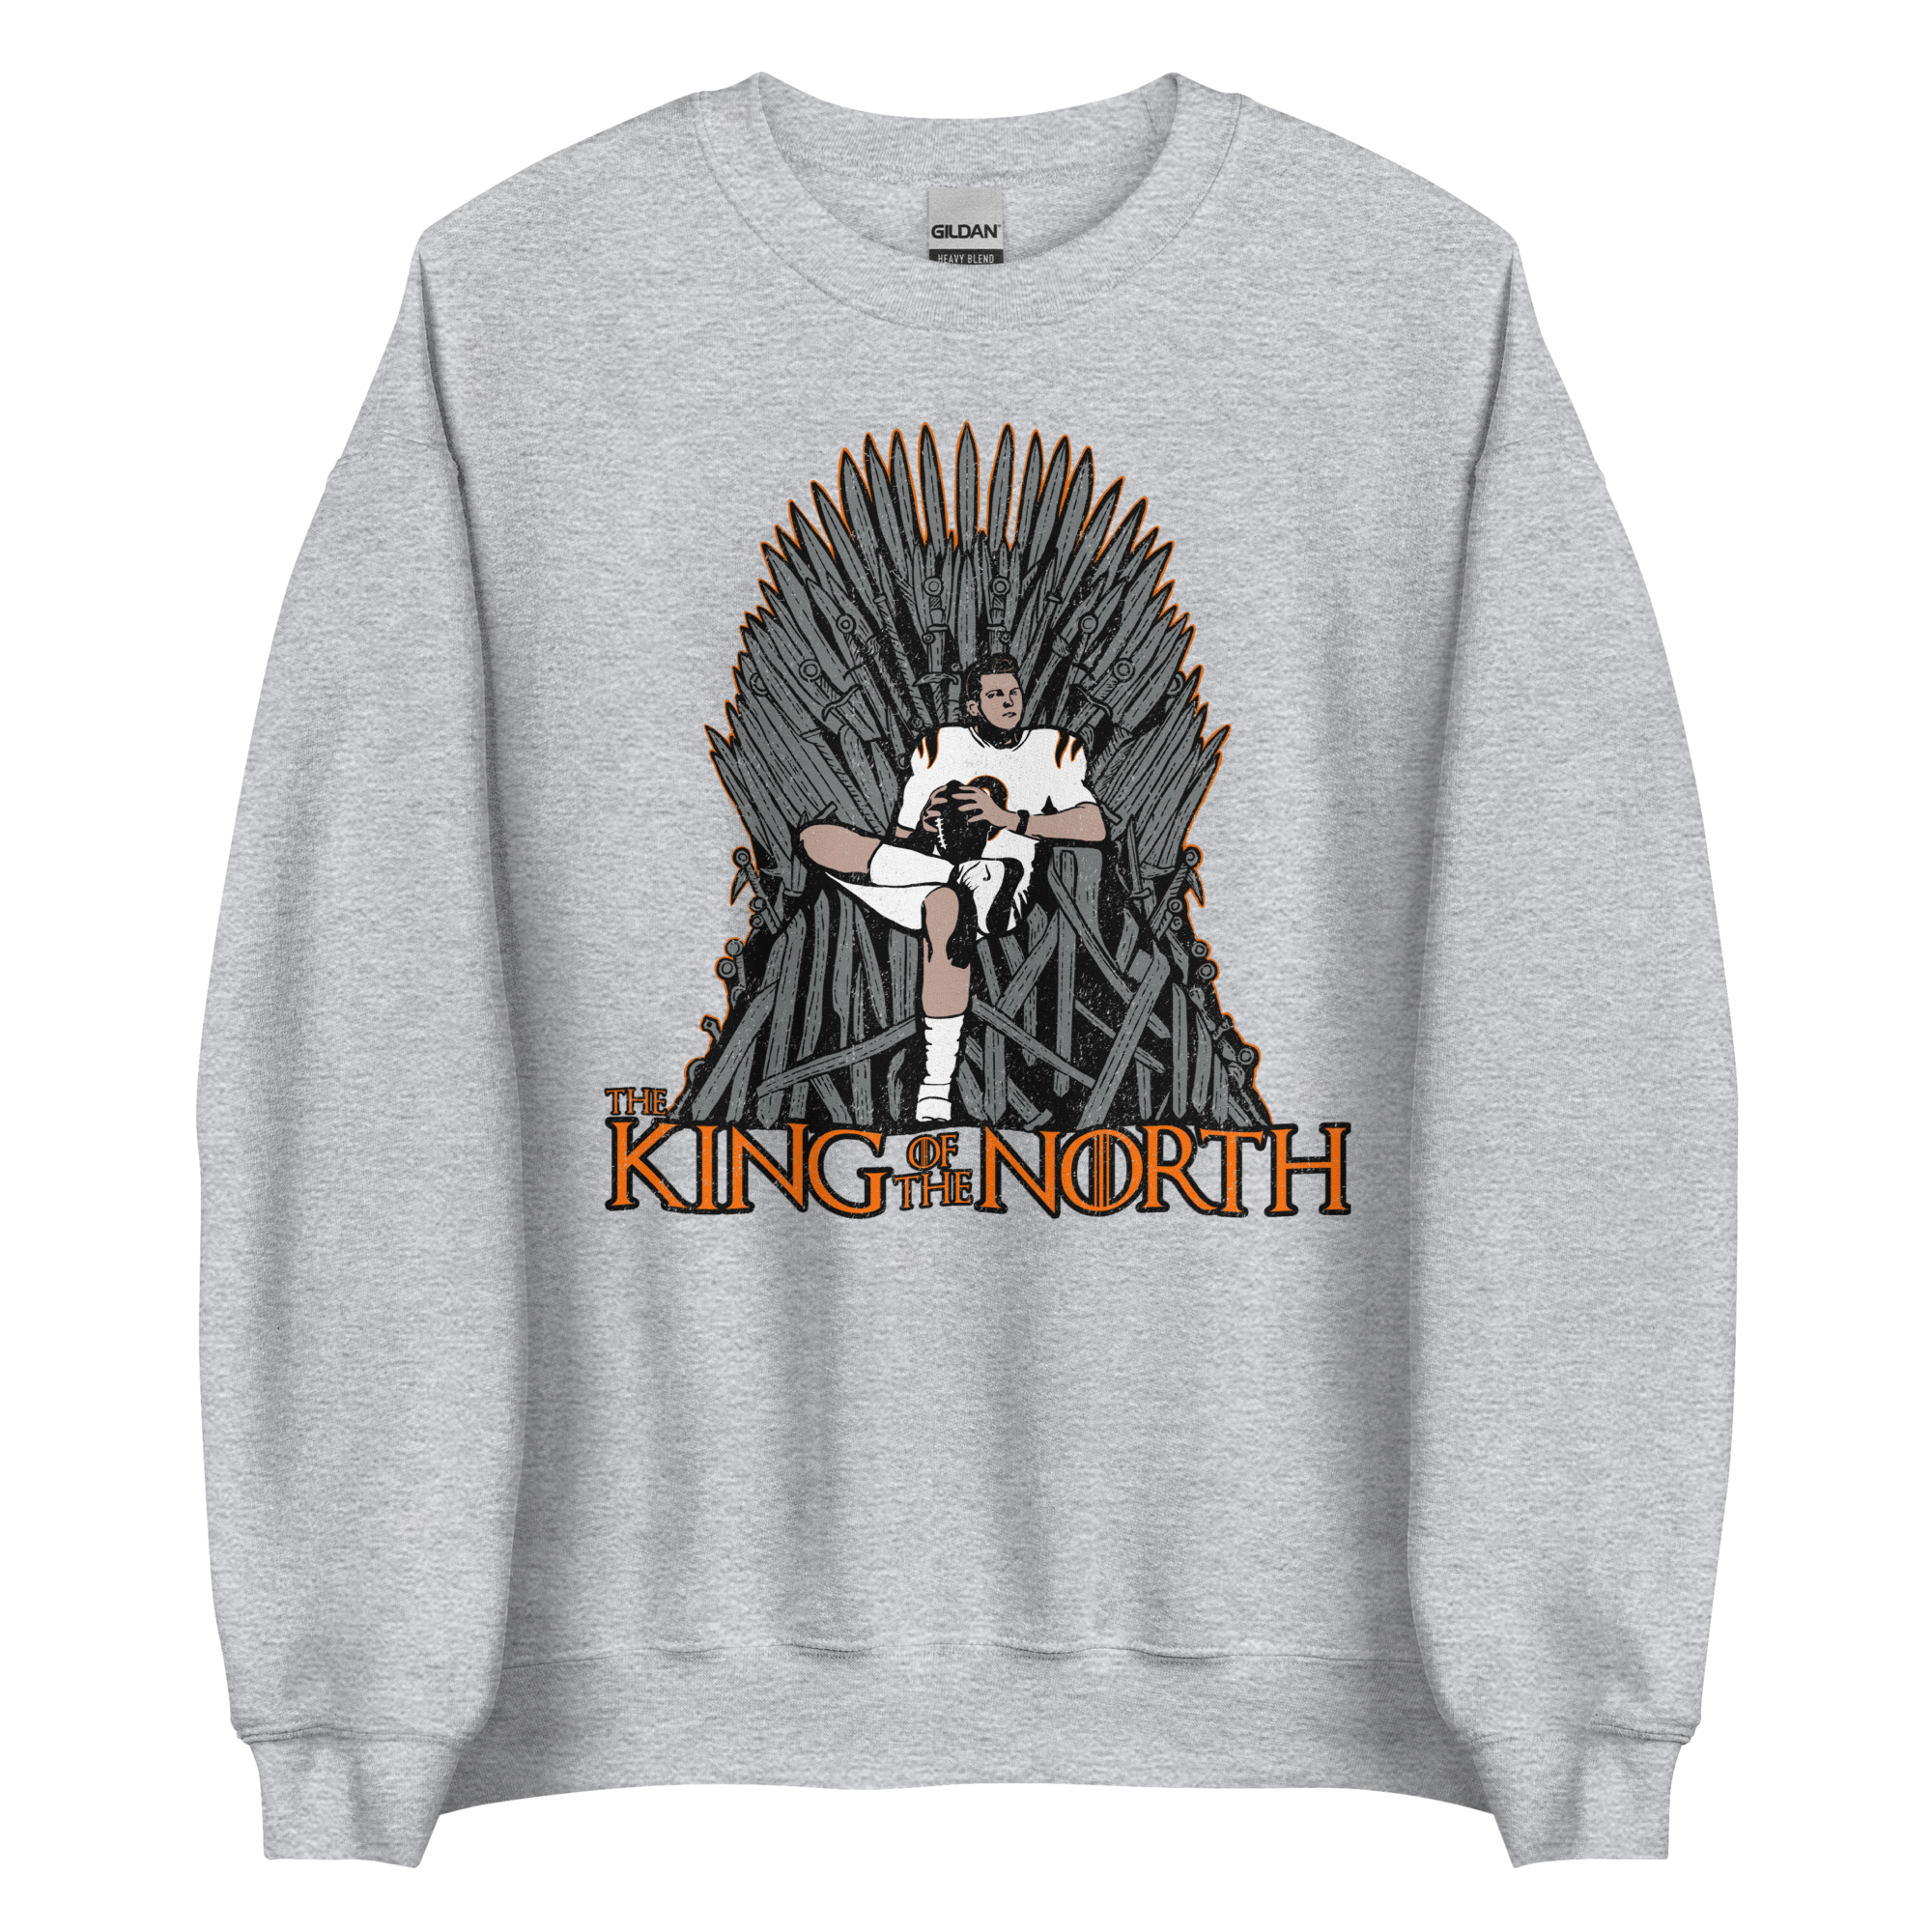 The King of the North Sweatshirt